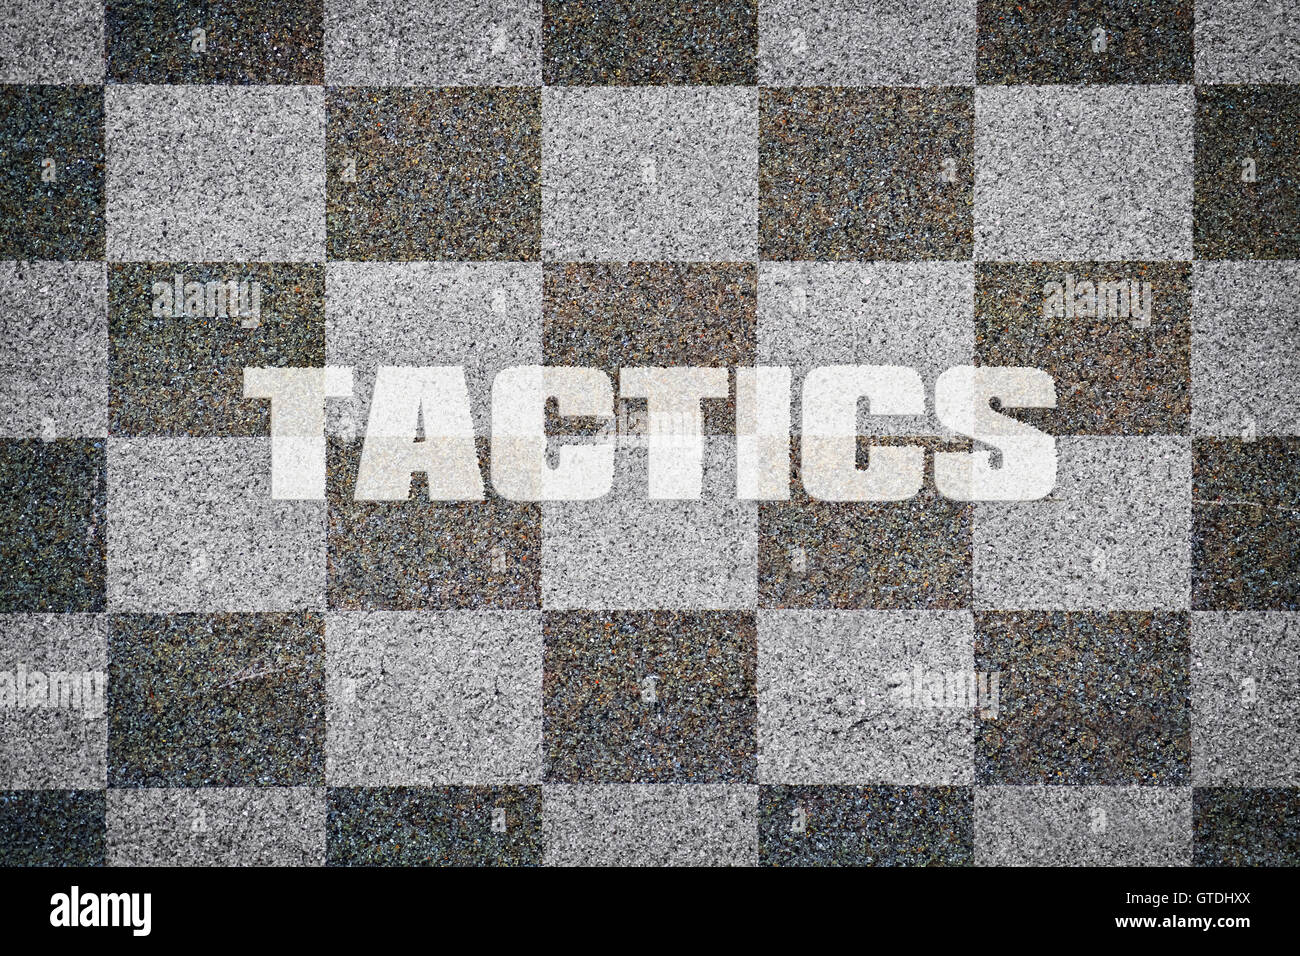 Word Tactics written on textured chessboard as background Stock Photo